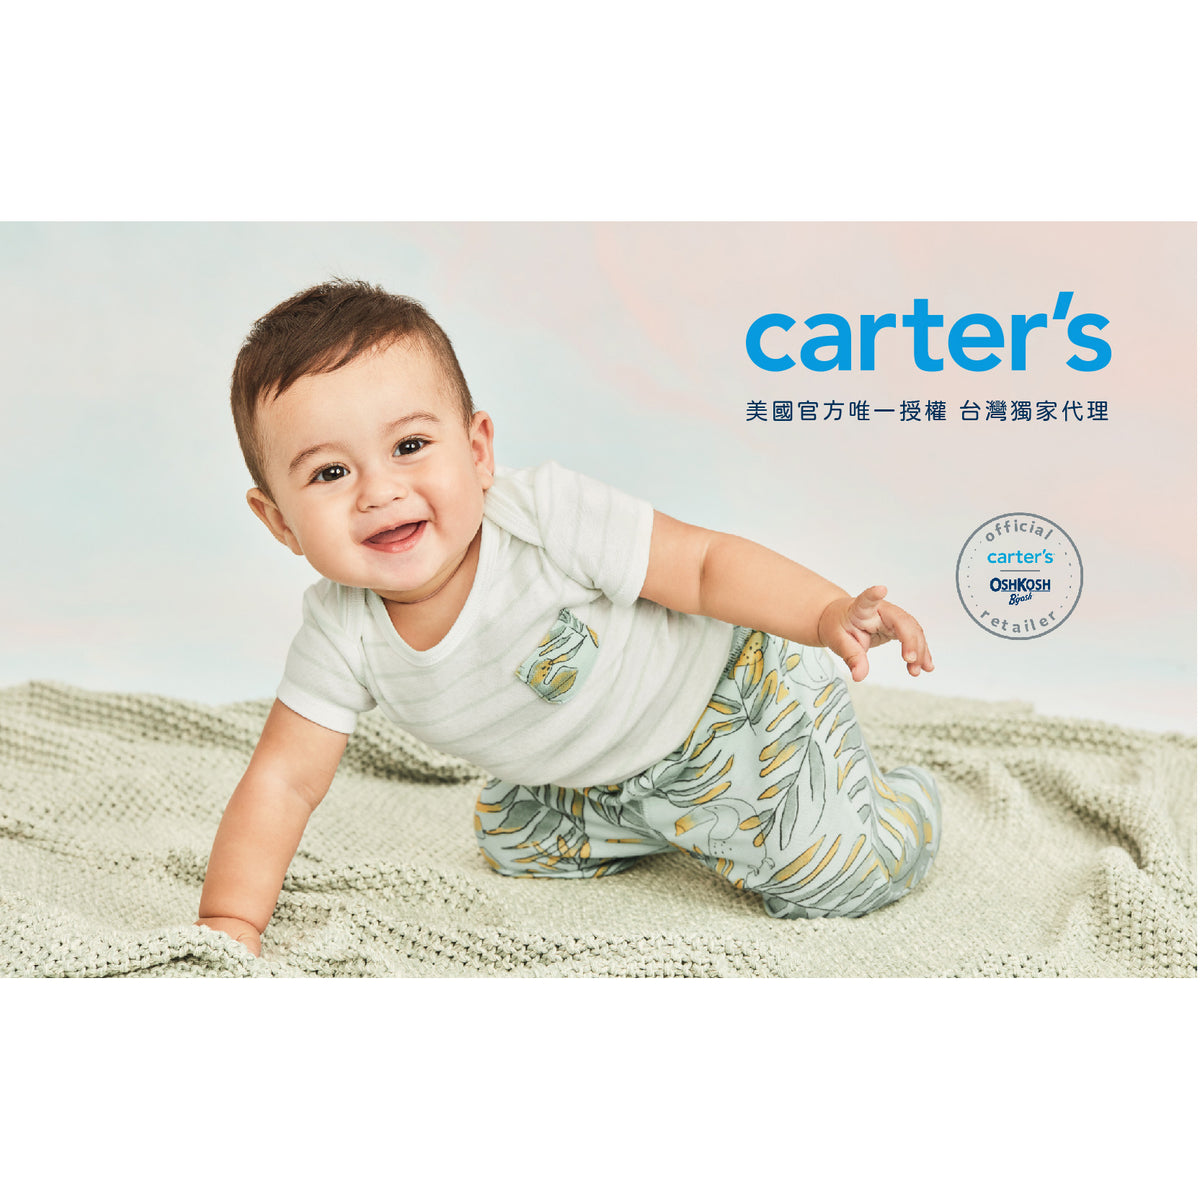 Carter's 可愛竹子熊貓3件組套裝(3M-12M)